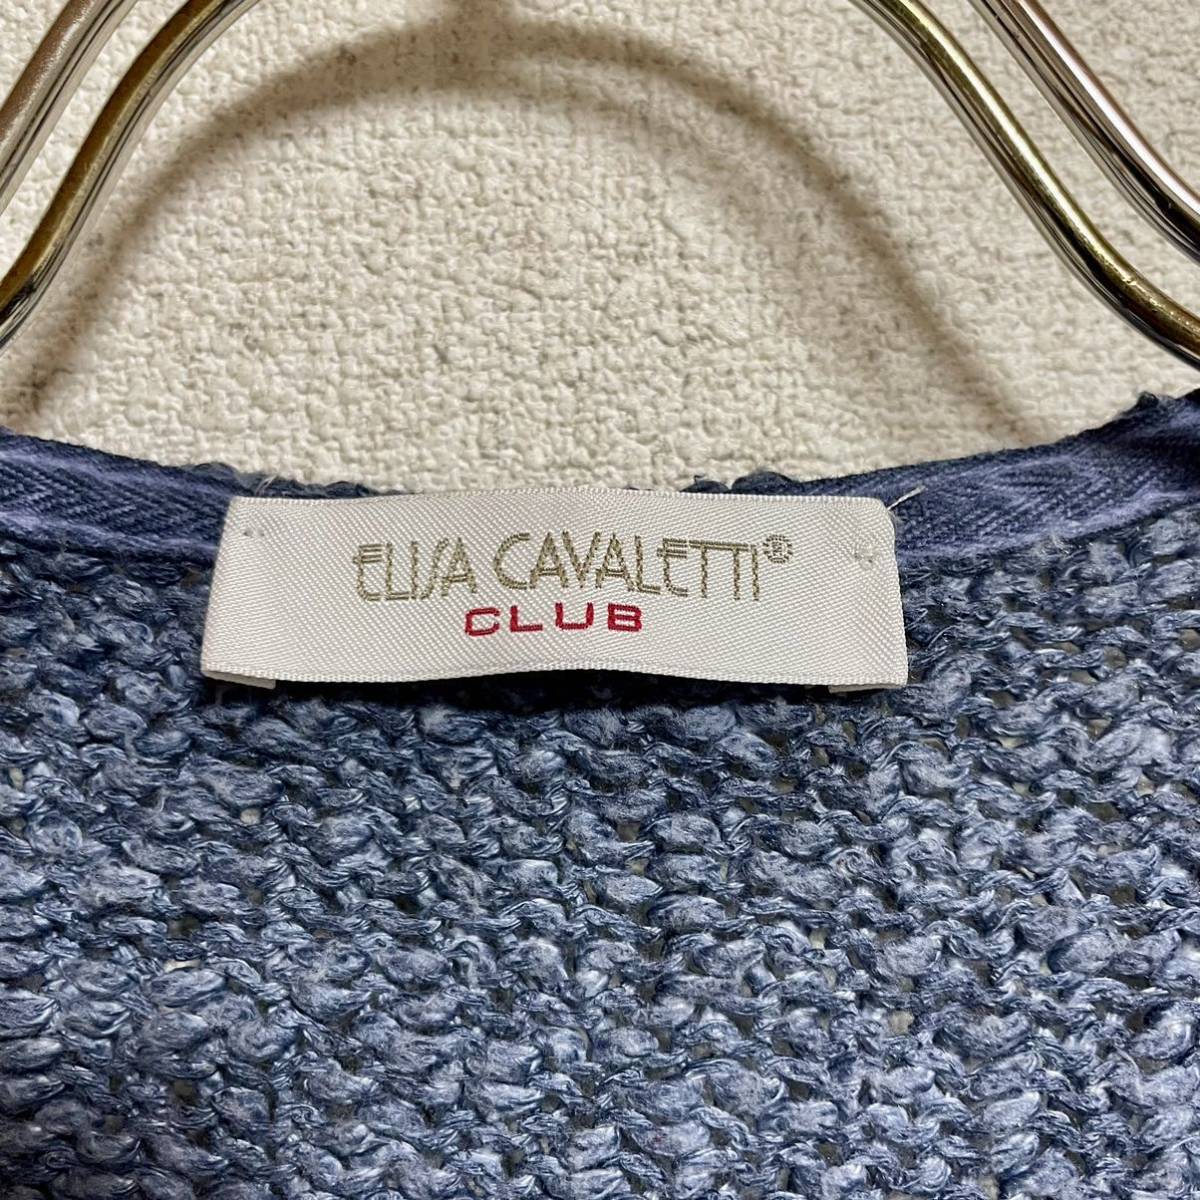 ELISA CAVALETTI clube Leeza kavareti cotton acrylic fiber switch knitted the best blue lady's size S *CT